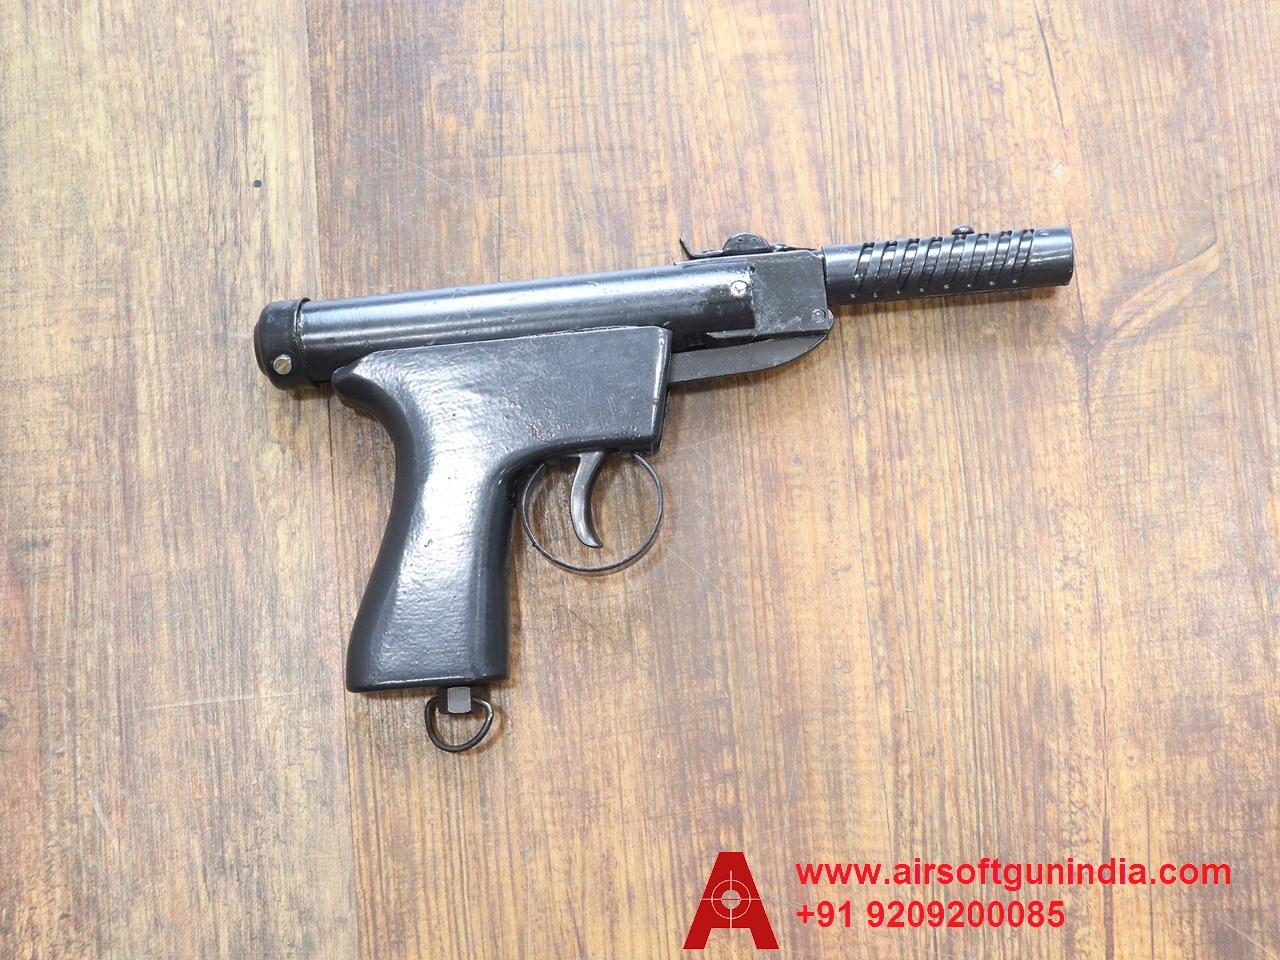 Prince Black Single-Shot .177 Caliber / 4.5 Mm Indian Air Pistol By Airsoft Gun India